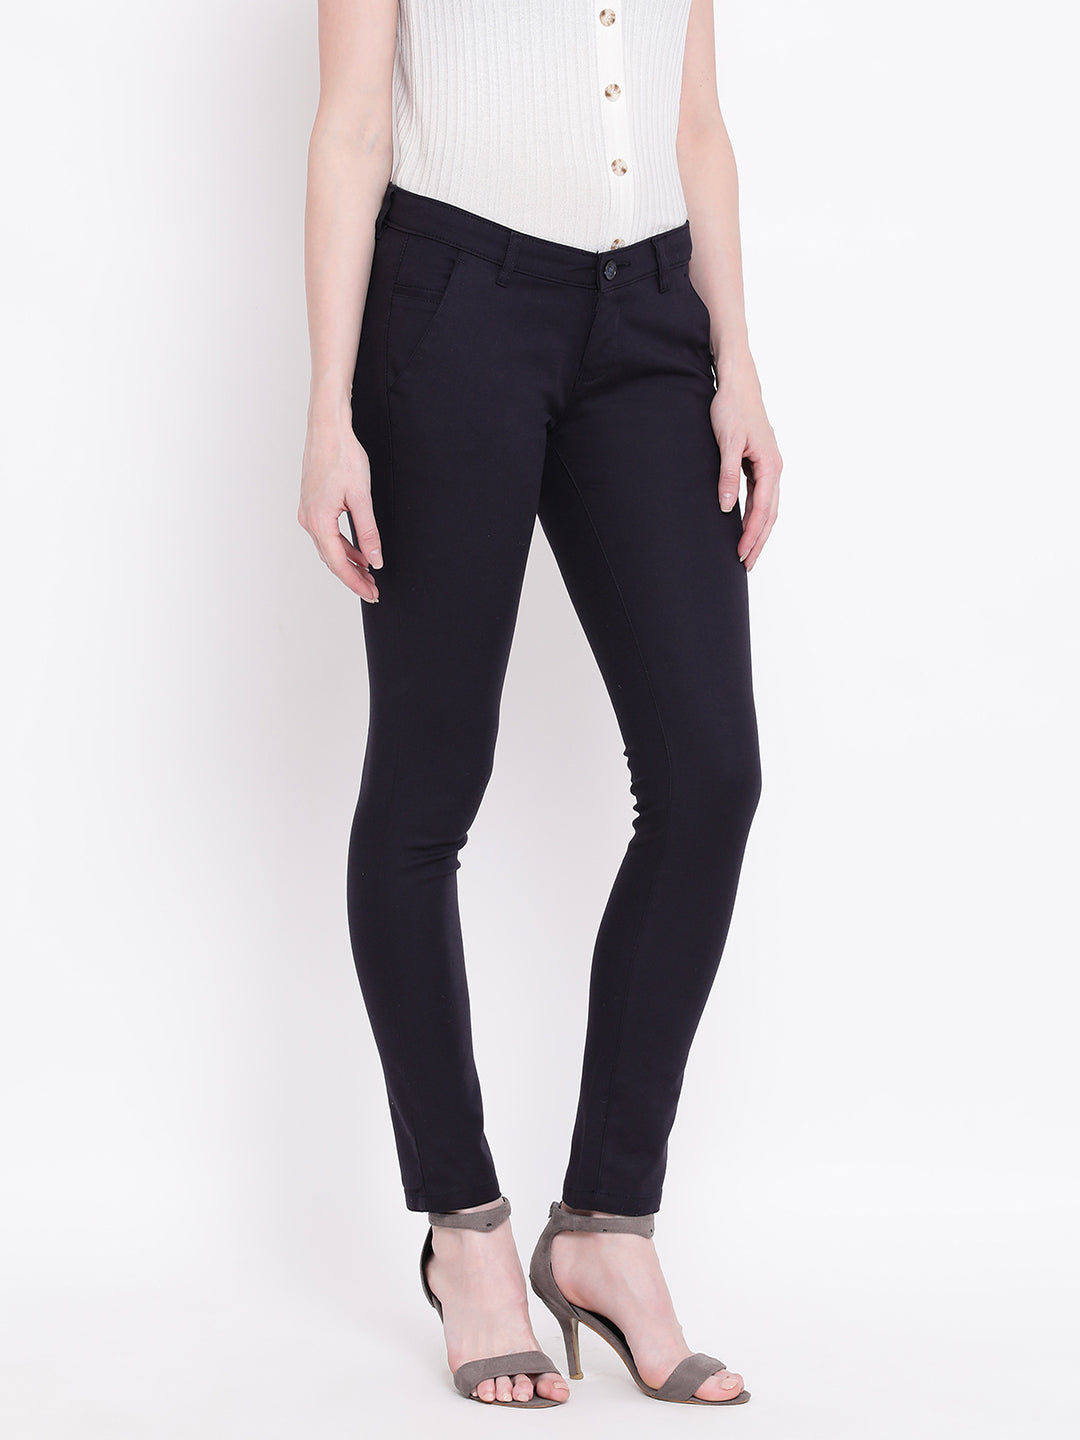 Buy Womens Black Slim Fit Trousers for Women Online at Bewakoof